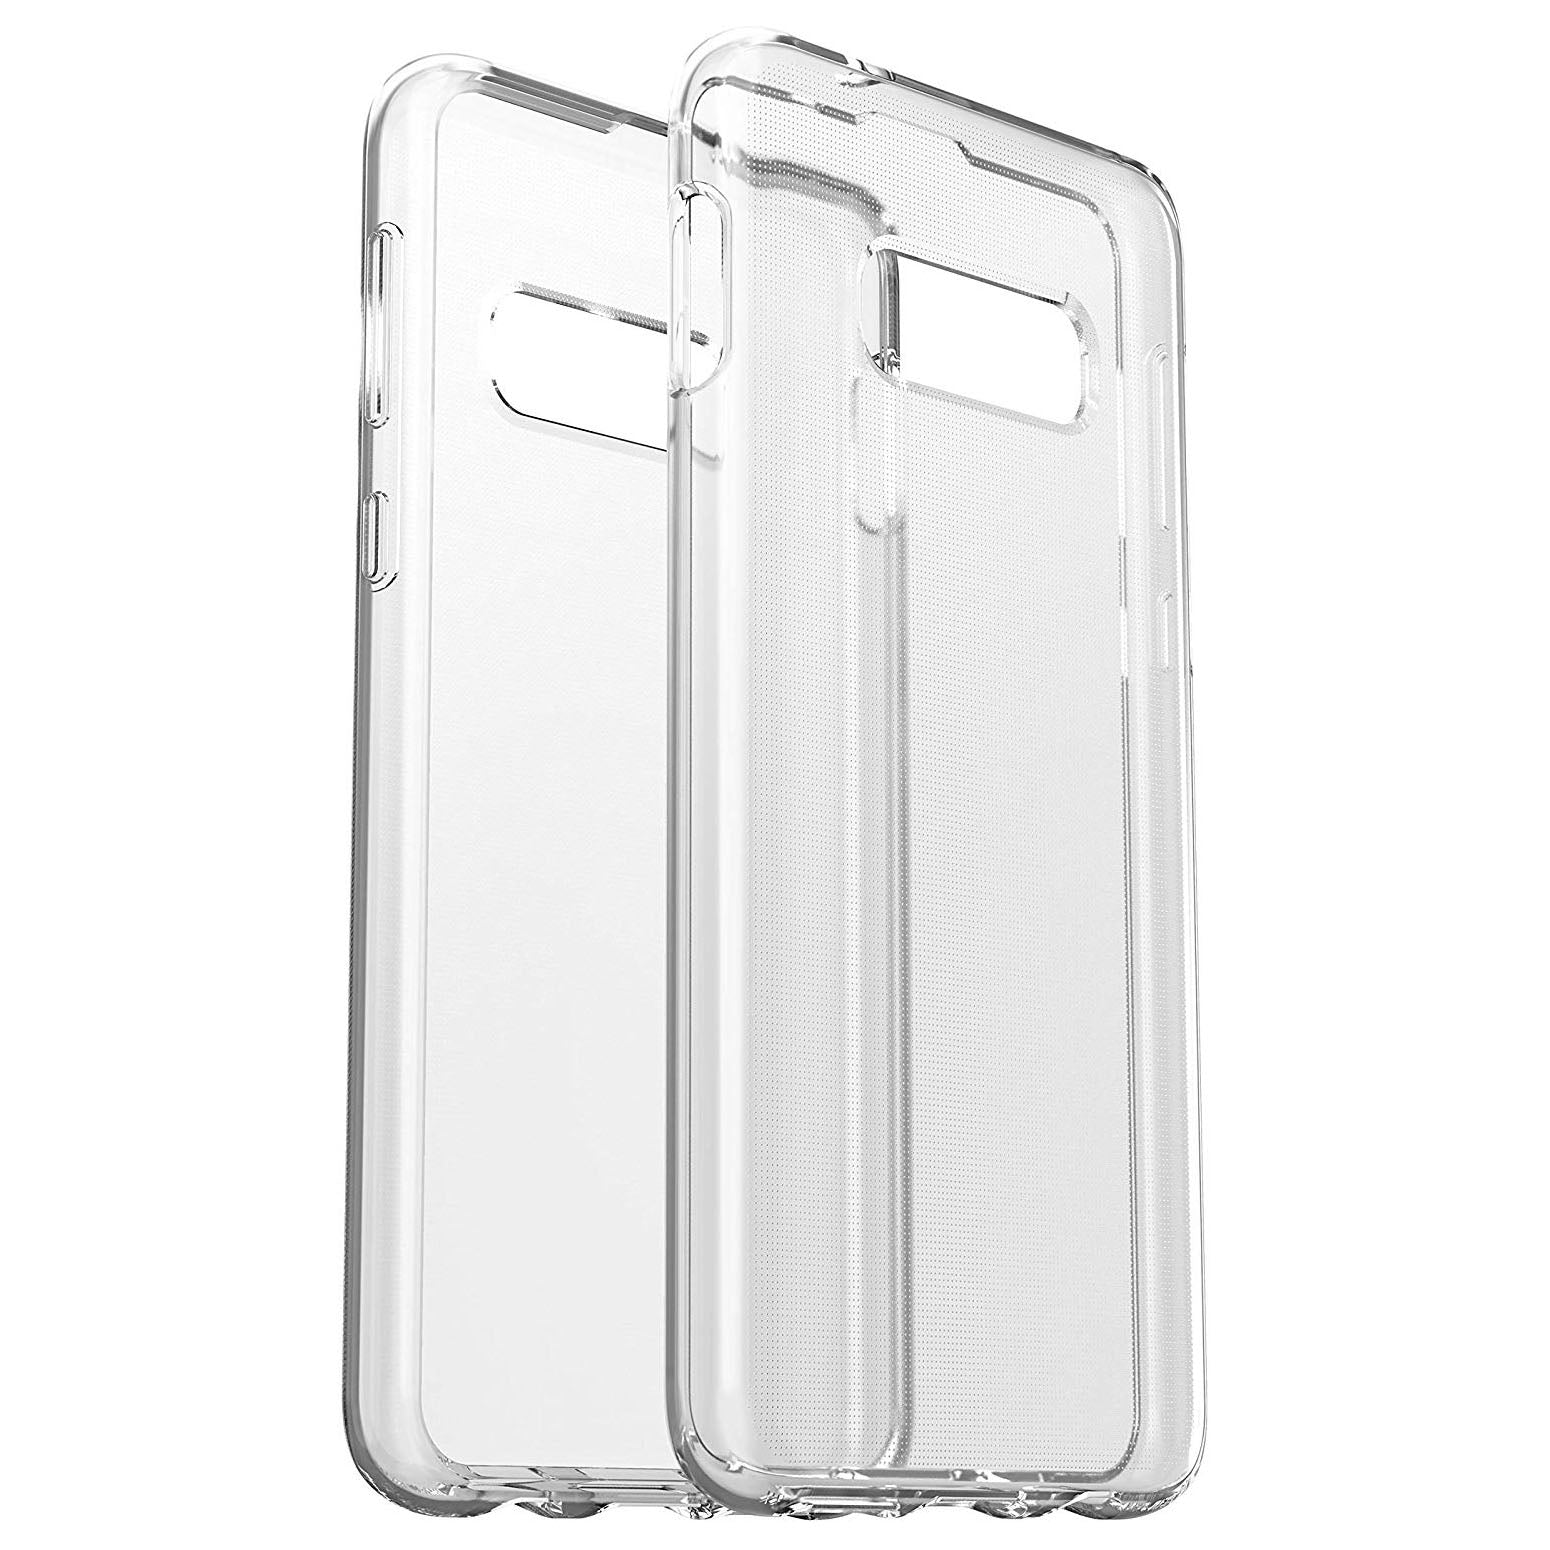 Samsung Galaxy S10e Cases, Covers &amp; Accessories